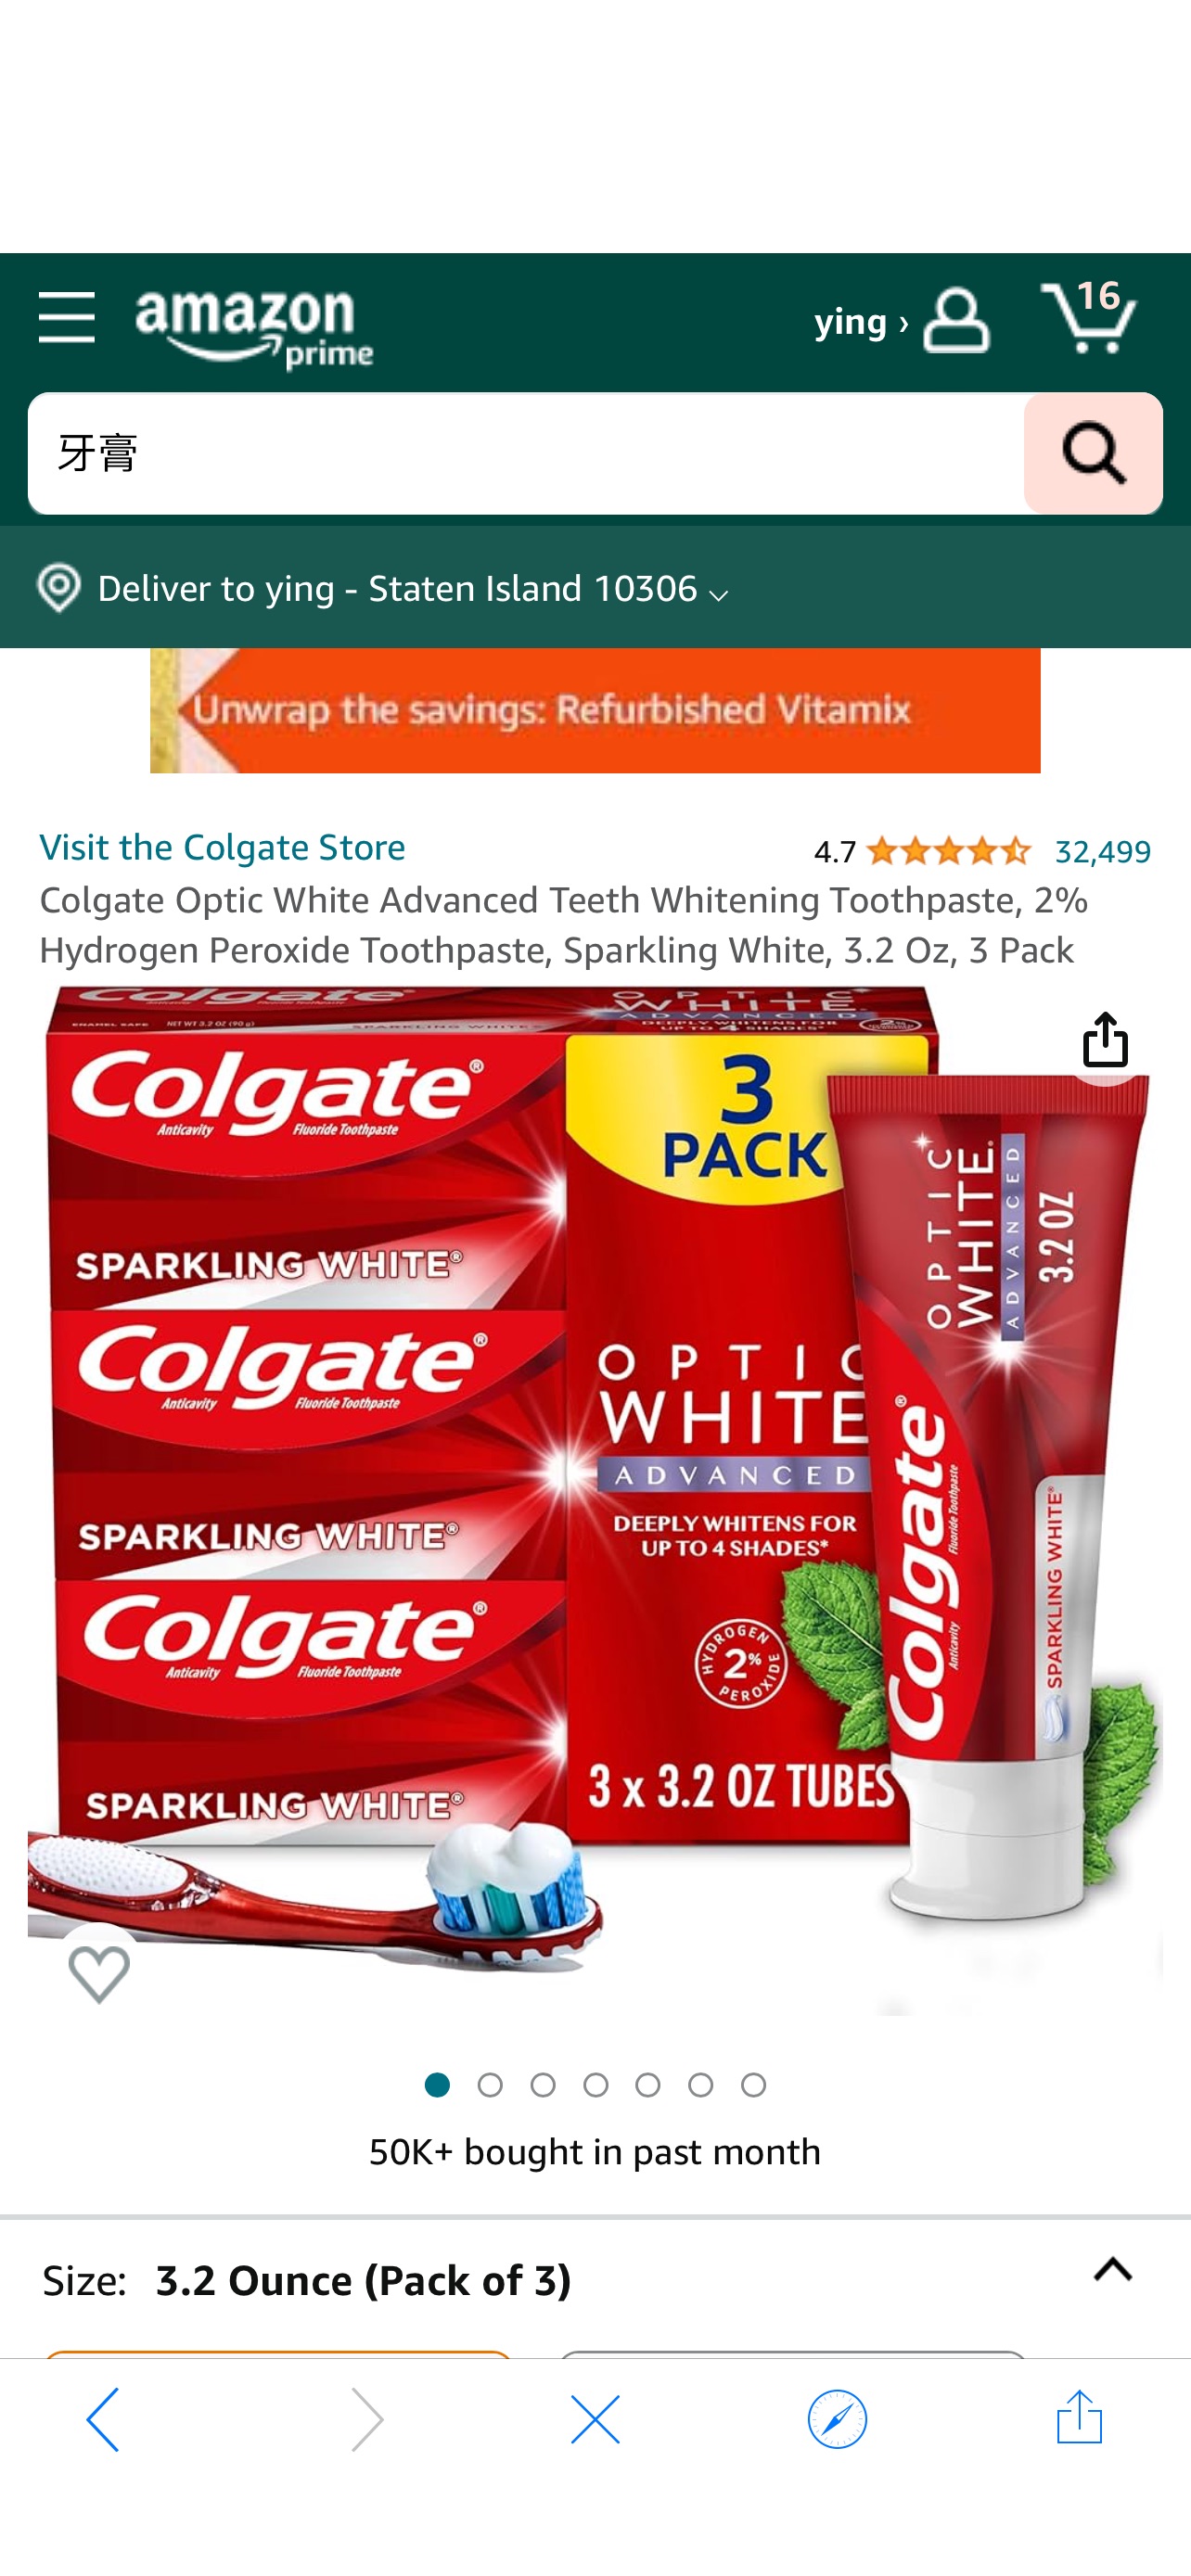 Amazon.com : Colgate Optic White Advanced Teeth Whitening Toothpaste, 2% Hydrogen Peroxide Toothpaste, Sparkling White, 3.2 Oz, 3 Pack : Health & Household